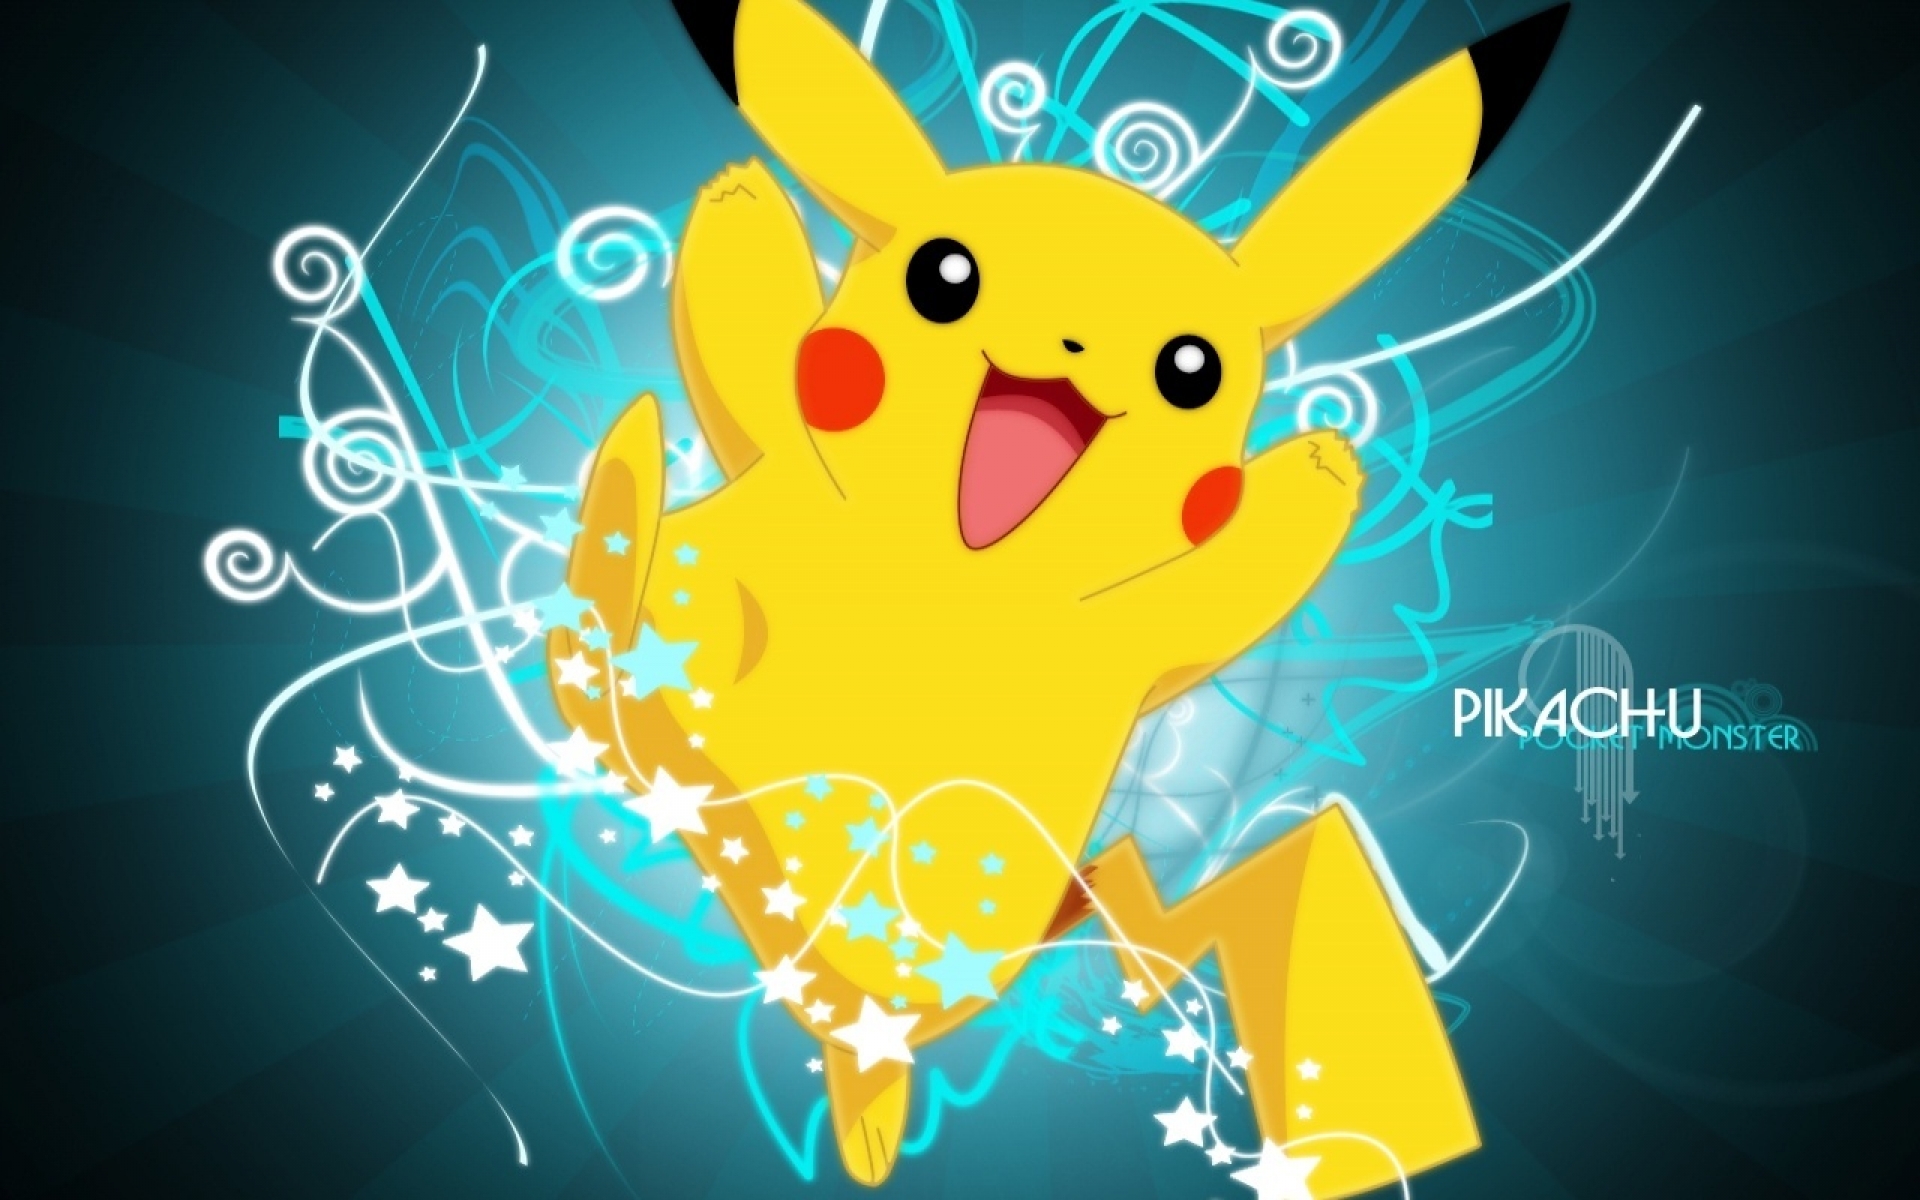 pokemon wallpaper hd download,graphic design,cartoon,font,illustration,graphics